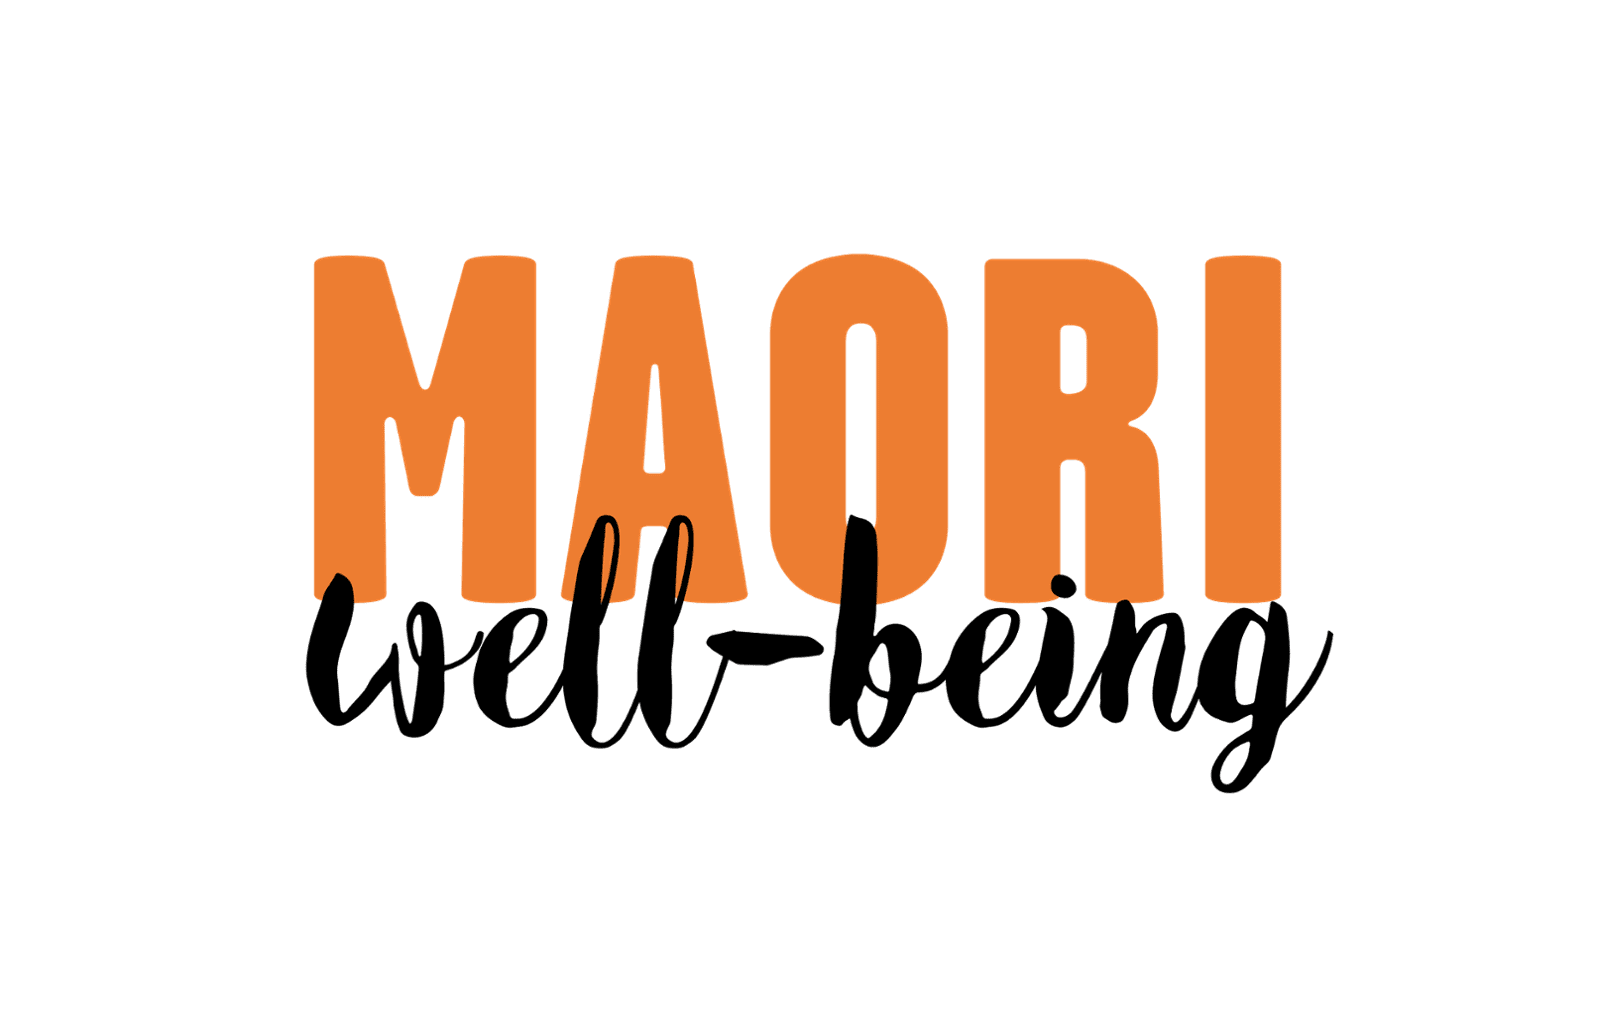 MAORI well-being